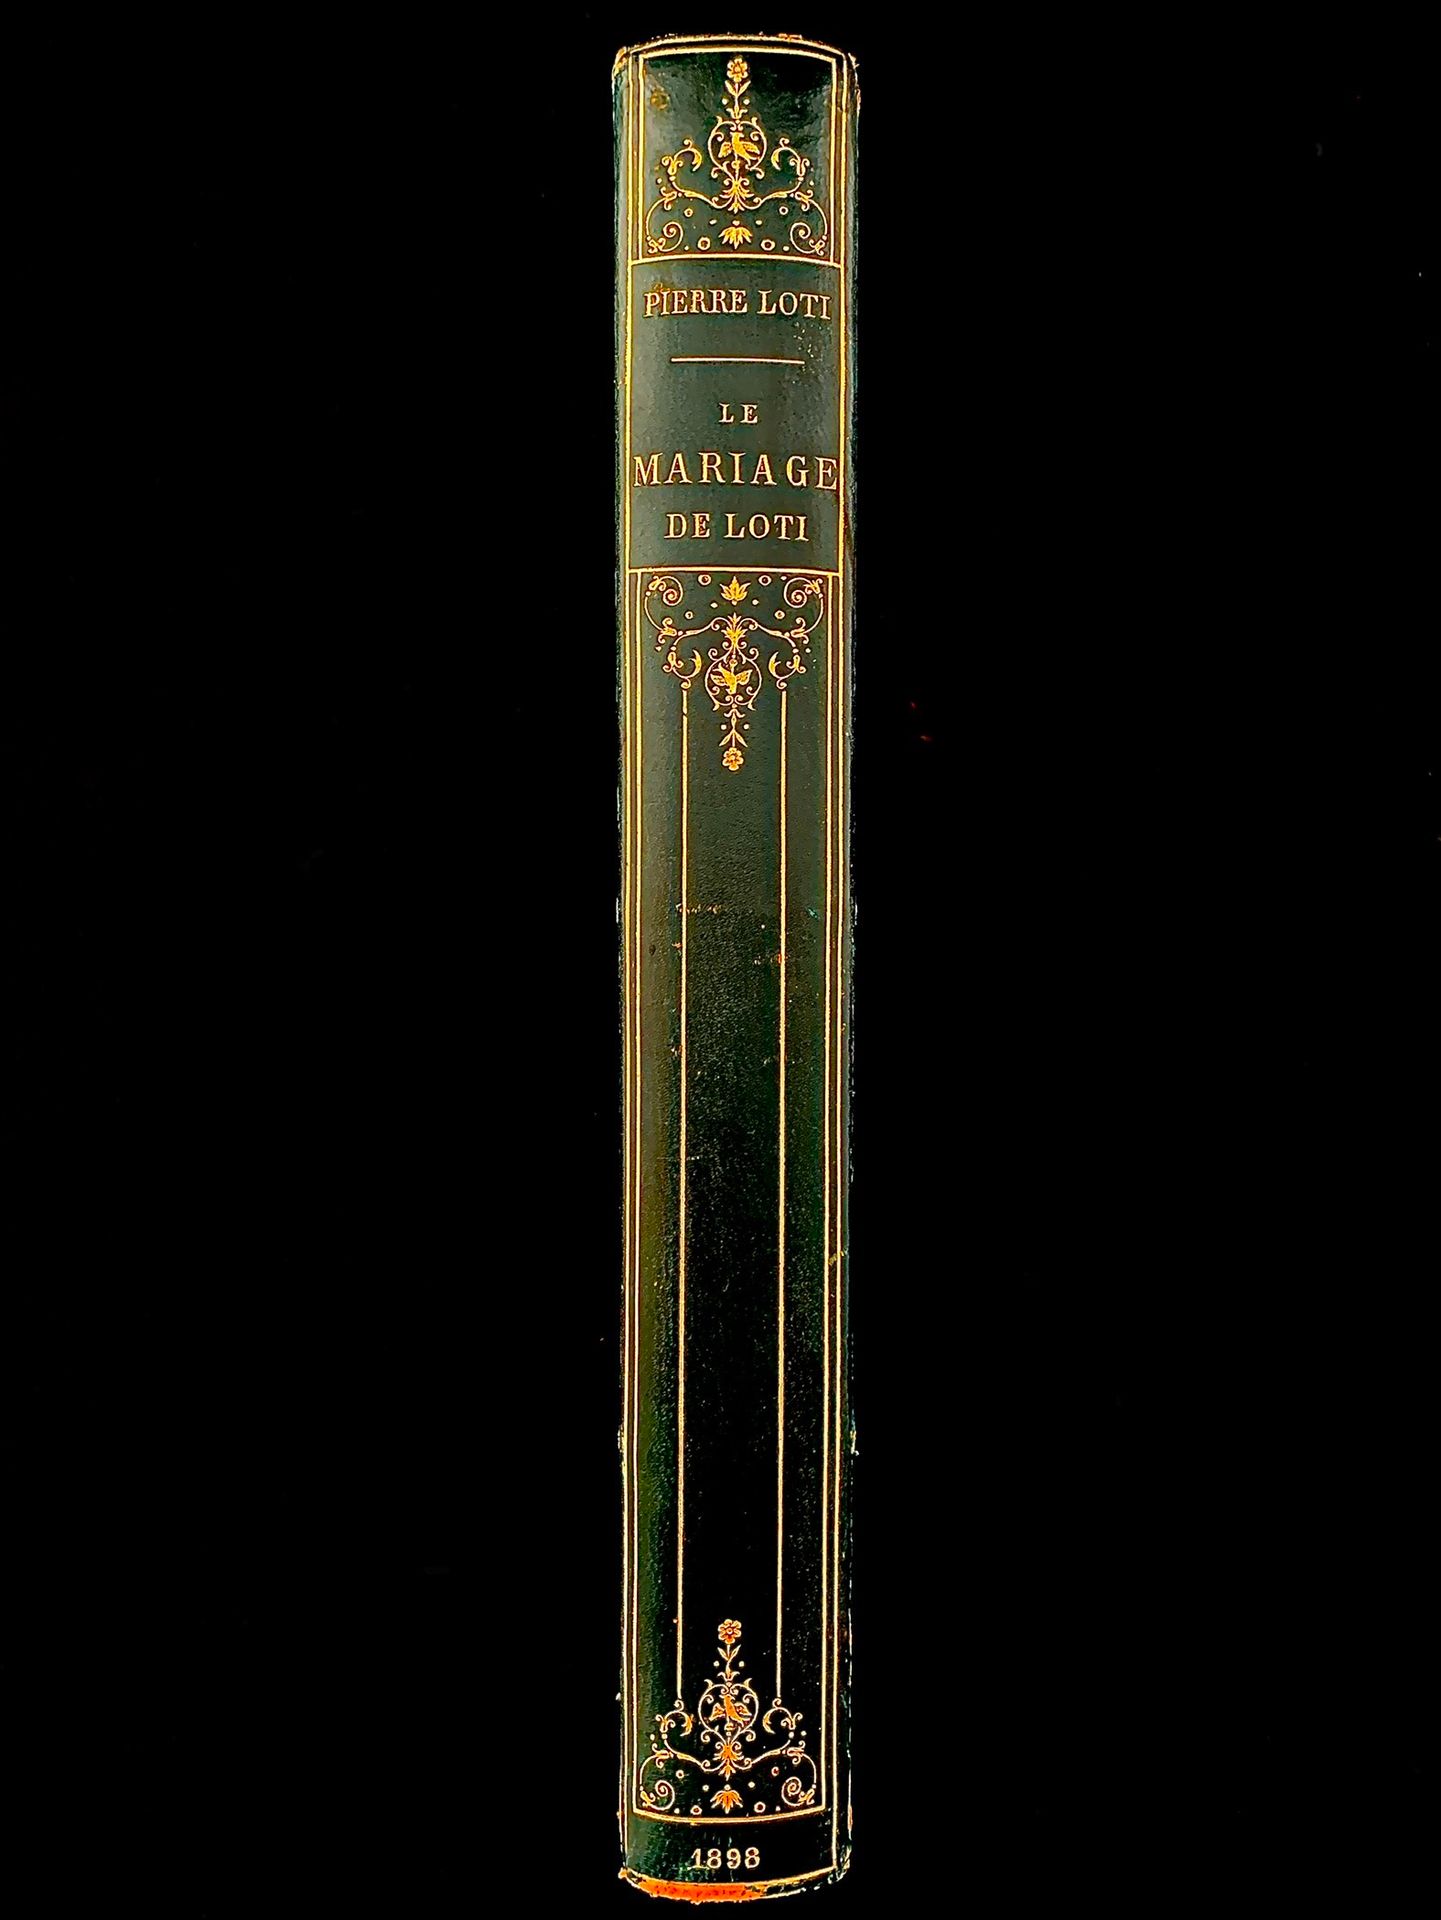 Null 皮埃尔-洛蒂，《洛蒂的婚姻》，罗伯迪和洛蒂的插图，Calmann Lévy éditeur巴黎，1898。大四合院，半小牛皮装订，带角，头部镀金。穿着&hellip;